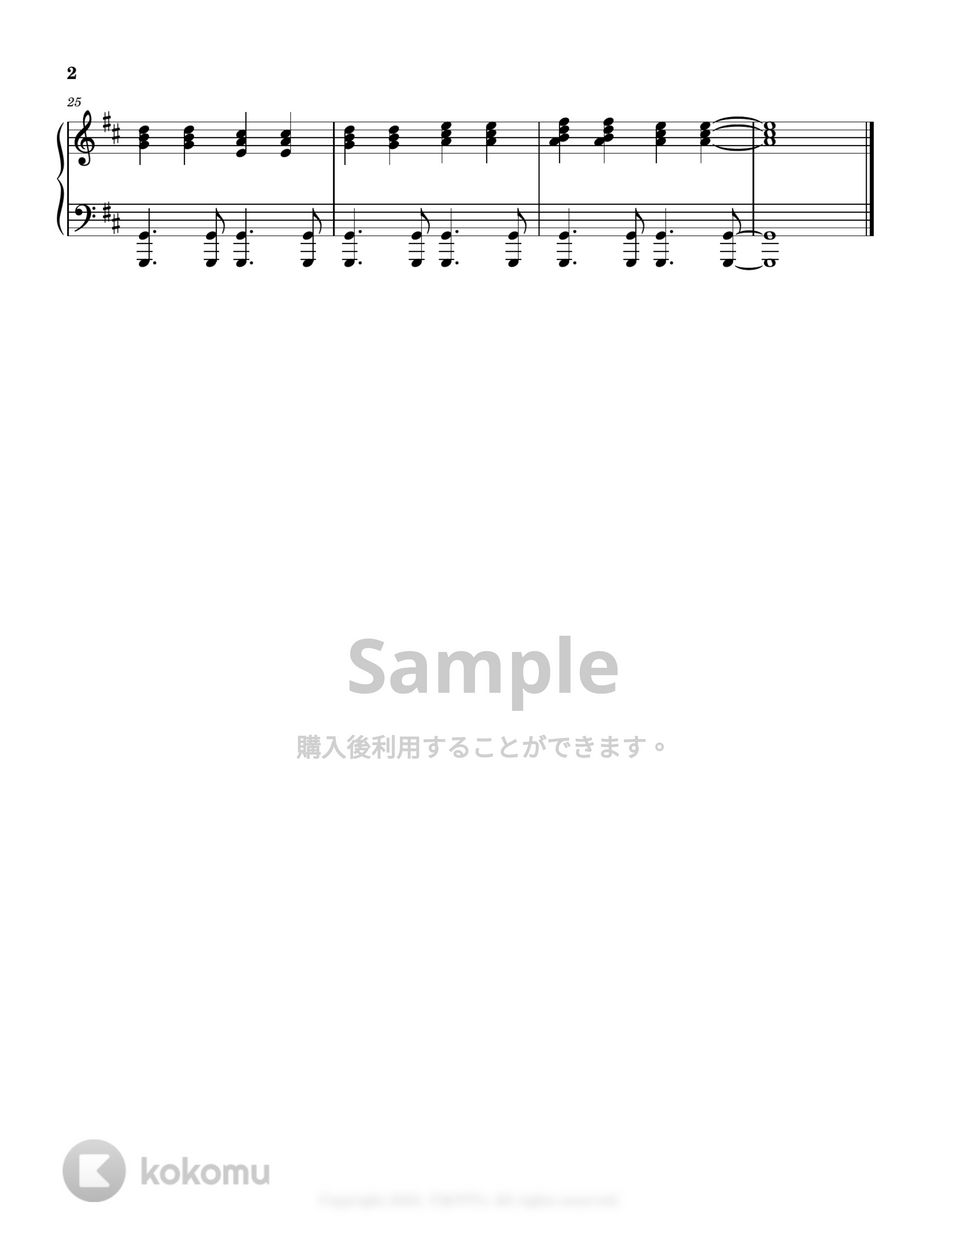 Seiji Kameda - 今夜、世界からこの恋が消えても (今夜、世界からこの恋が消えても track 28) by 今日ピアノ(Oneul Piano)